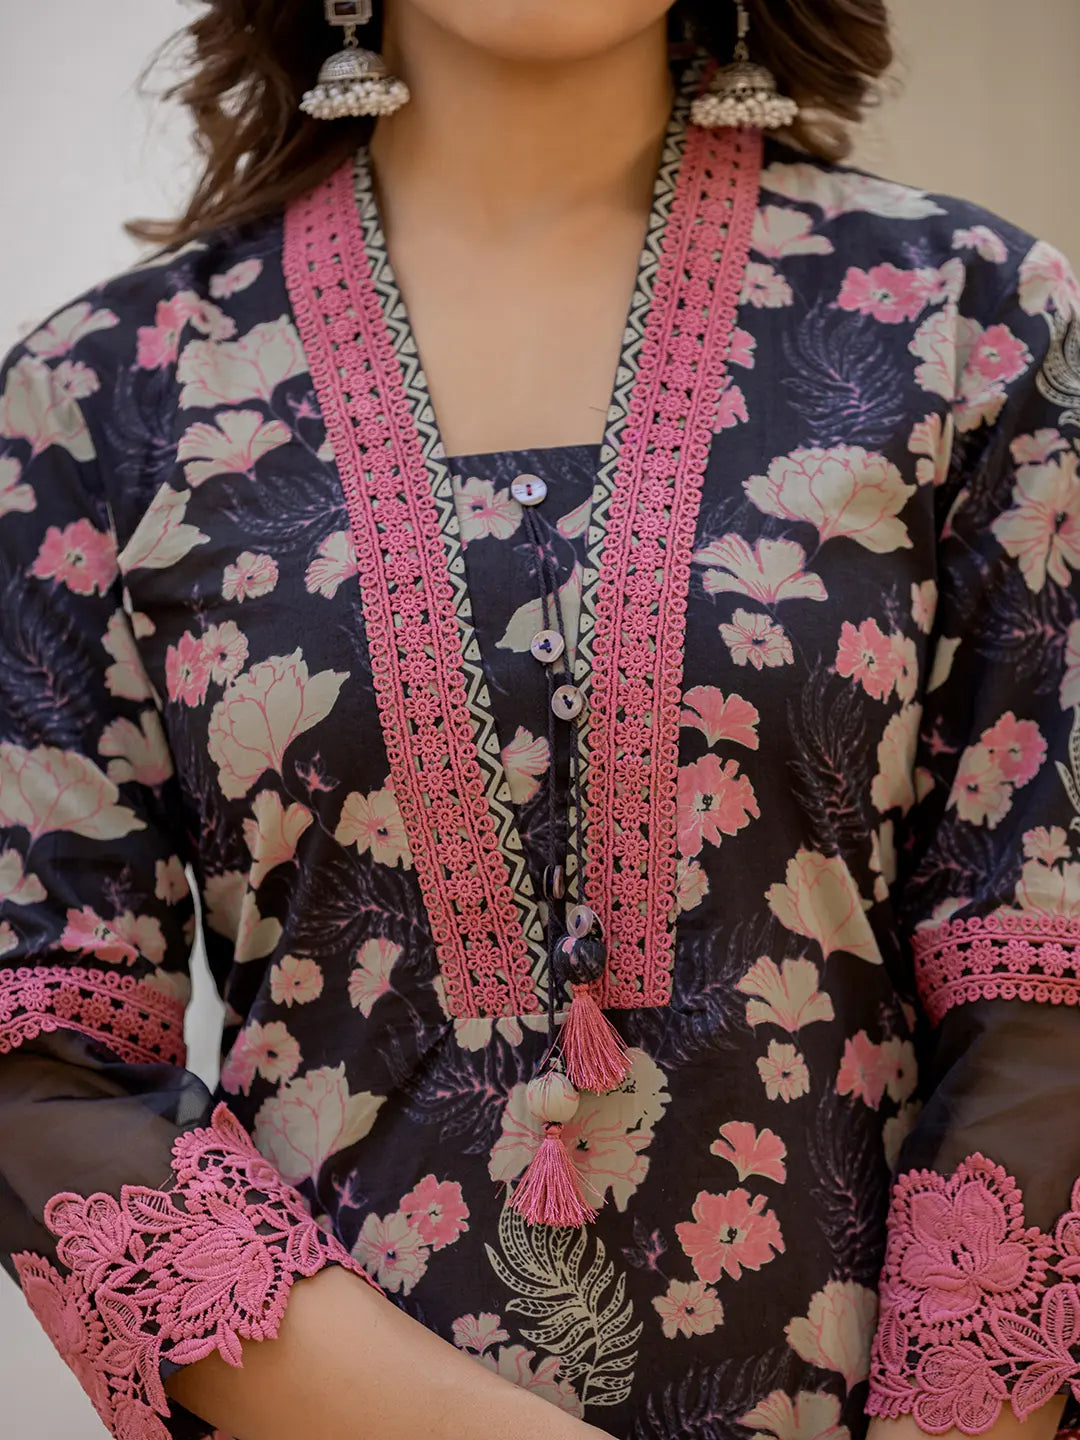 Black Floral Print Pakistani Style Kurta Trouser And Dupatta Set With Lace Work-Yufta Store-6885SKDBKM